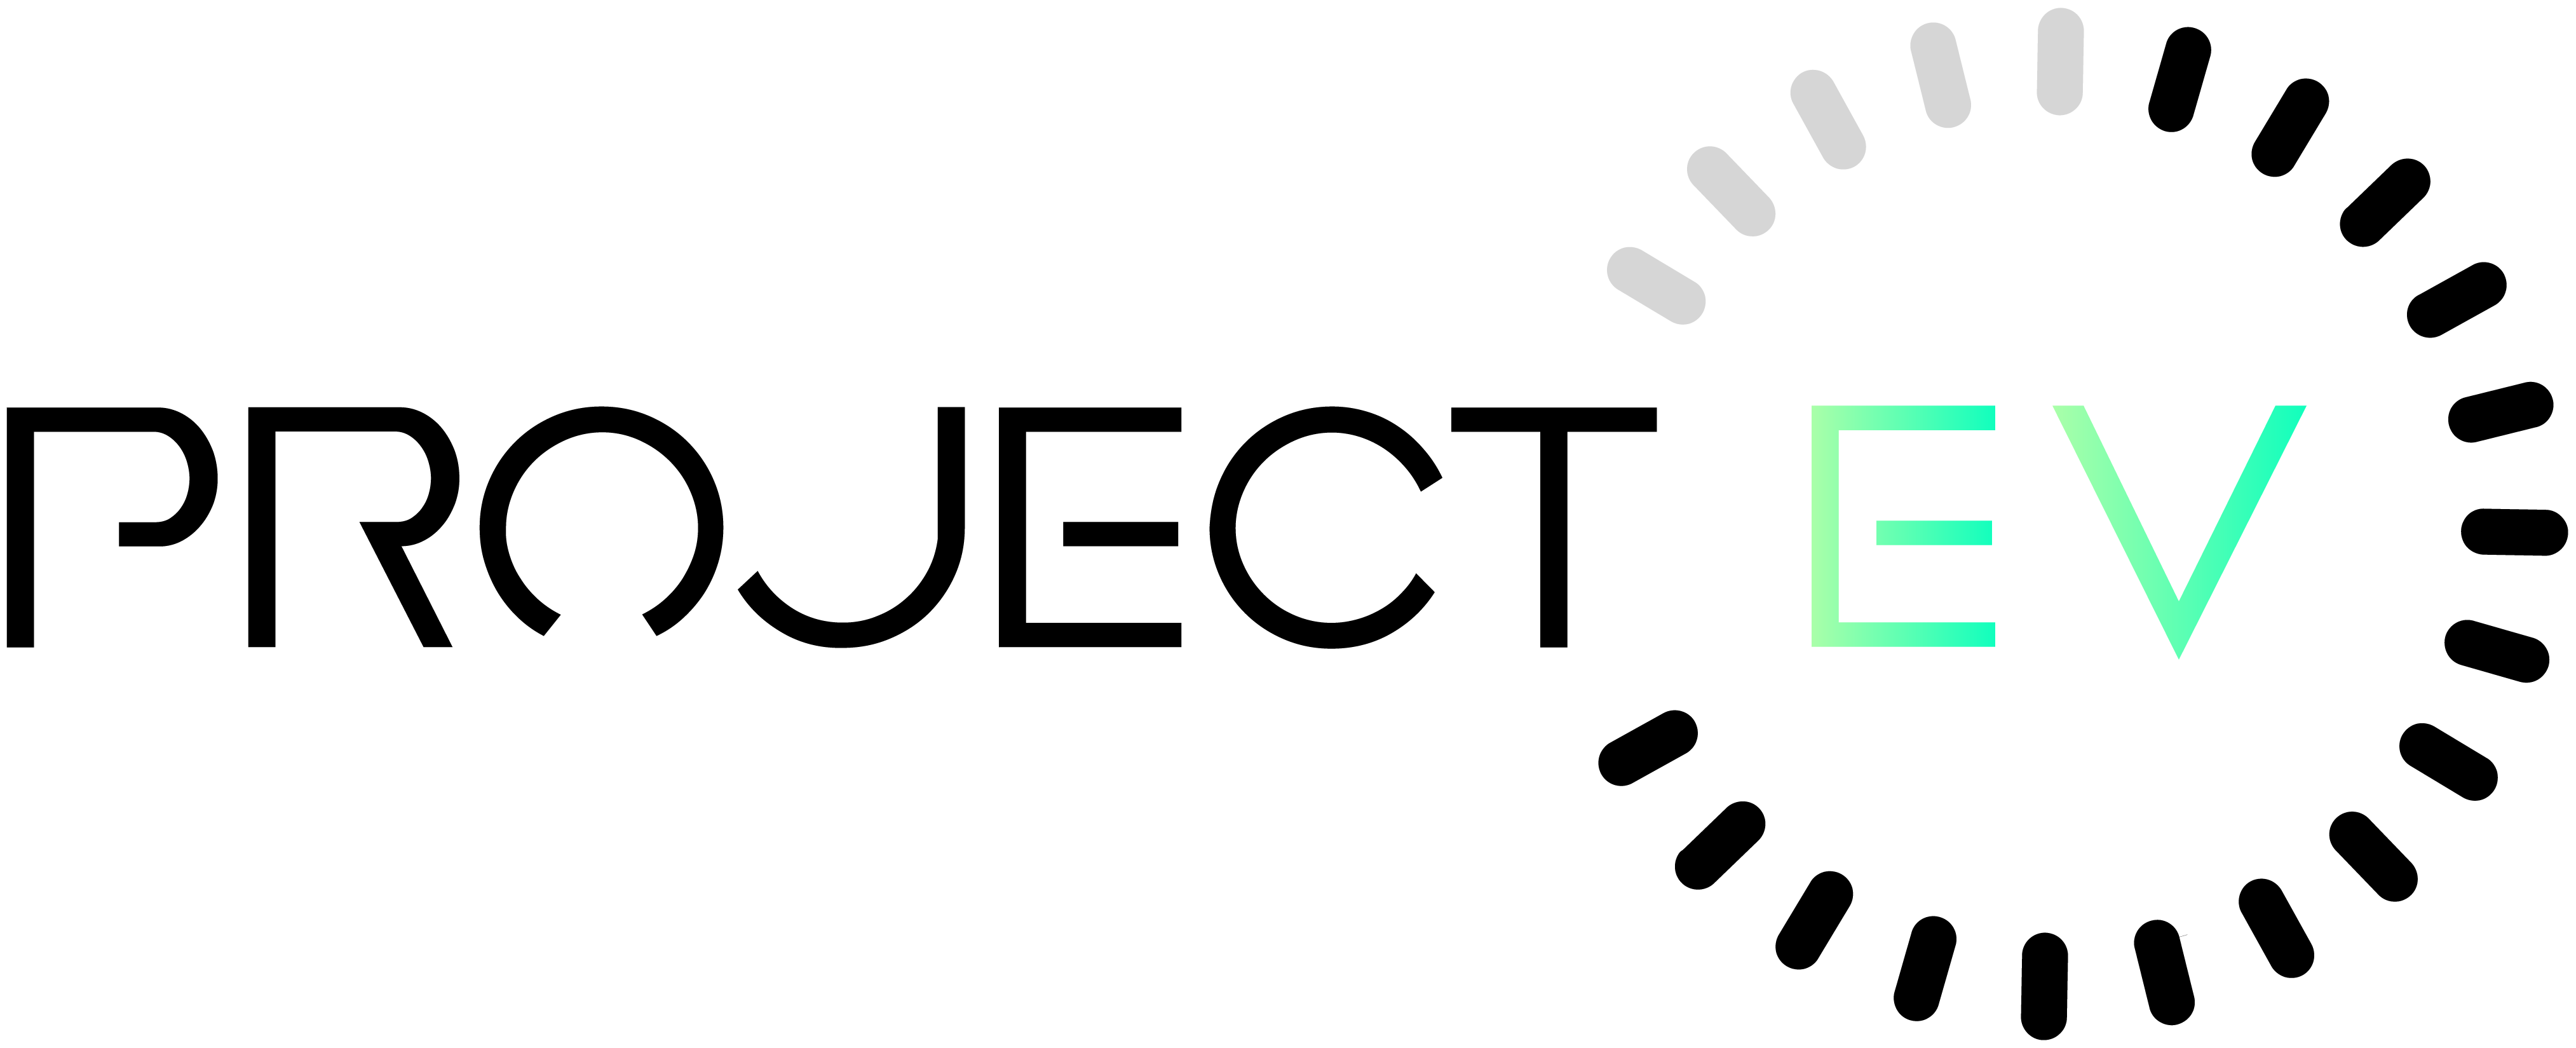 Project EV Logo (Black & Green)